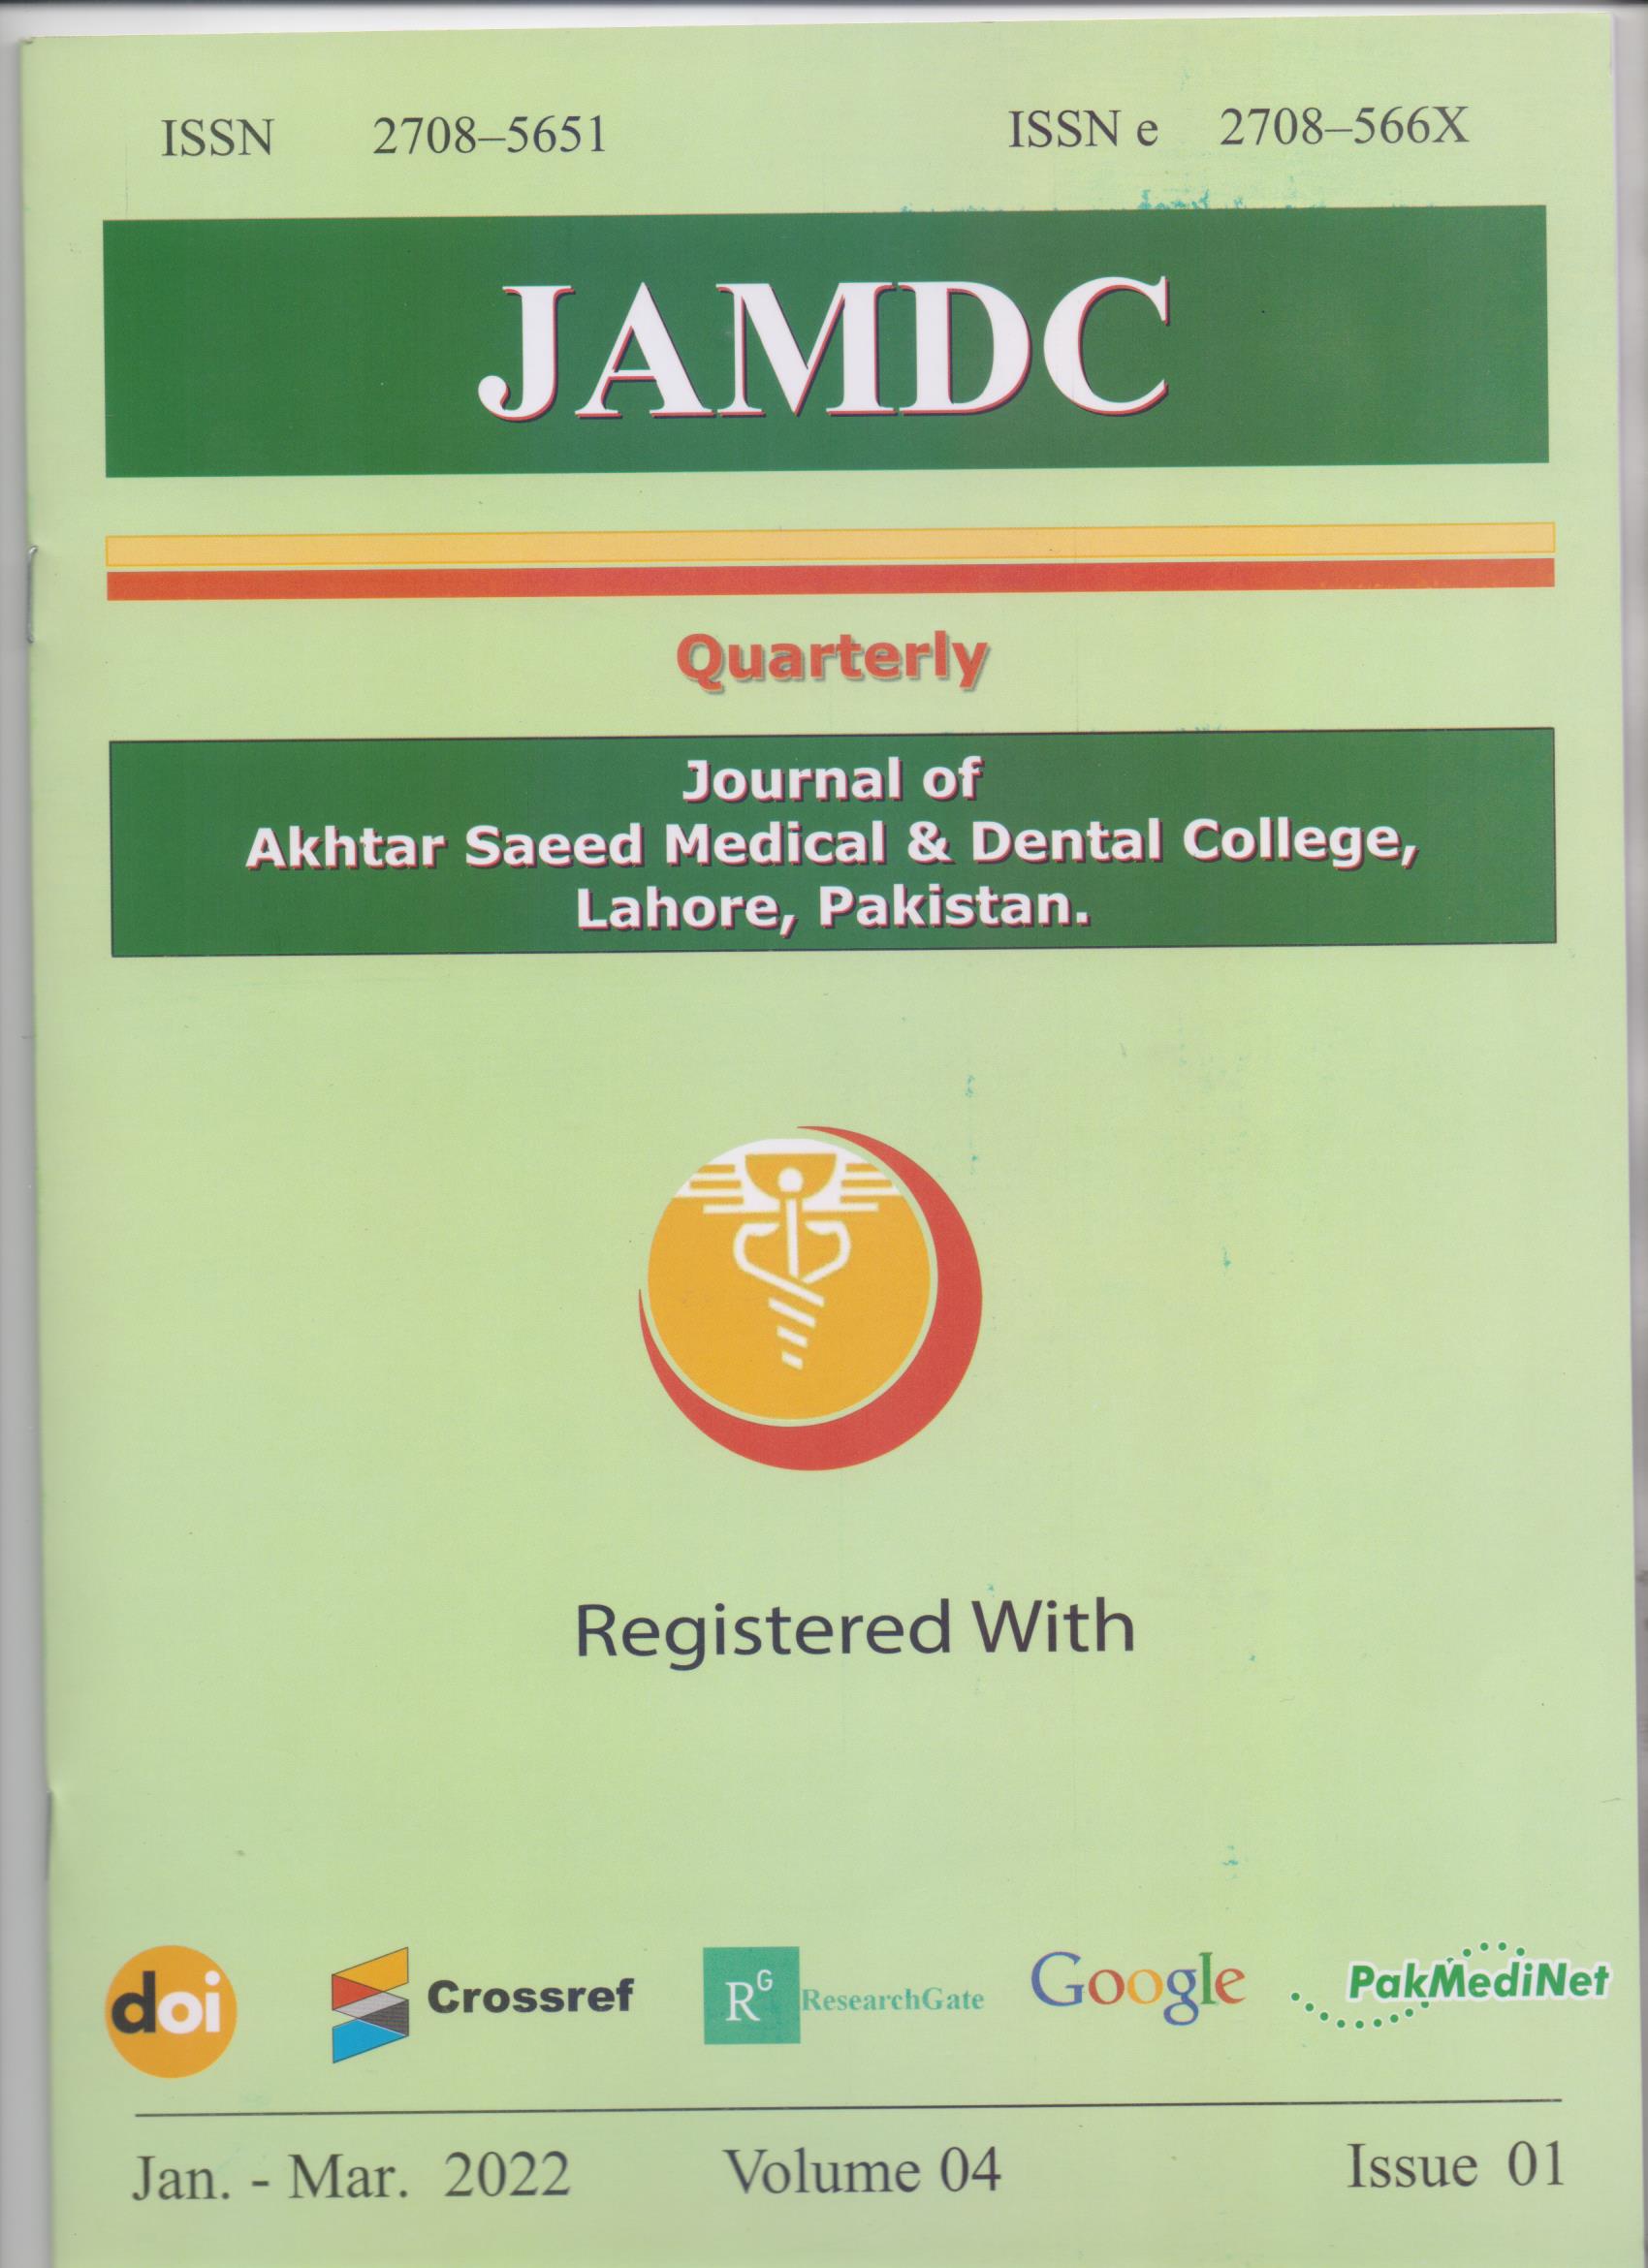 Akhtar Saeed Medical & Dental College